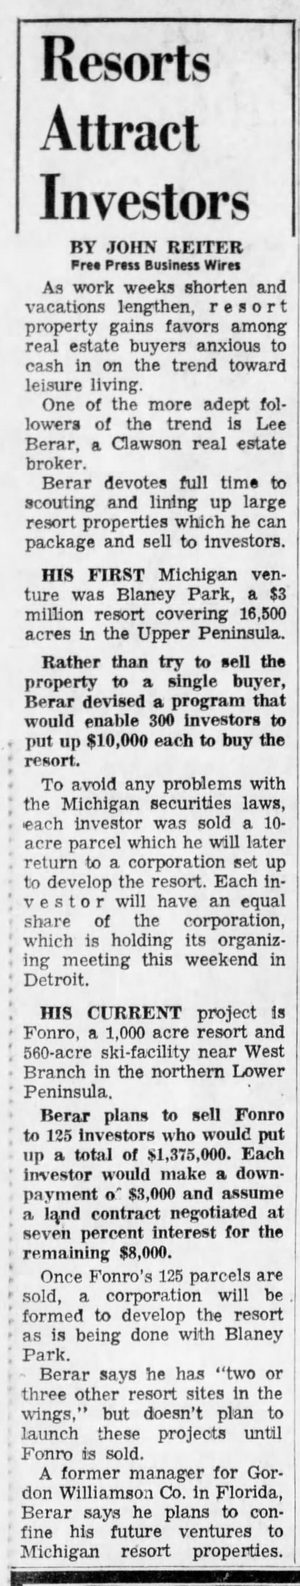 Fonro Lodge Resort Motel (Cole Creek) - 1969 Article On Investing